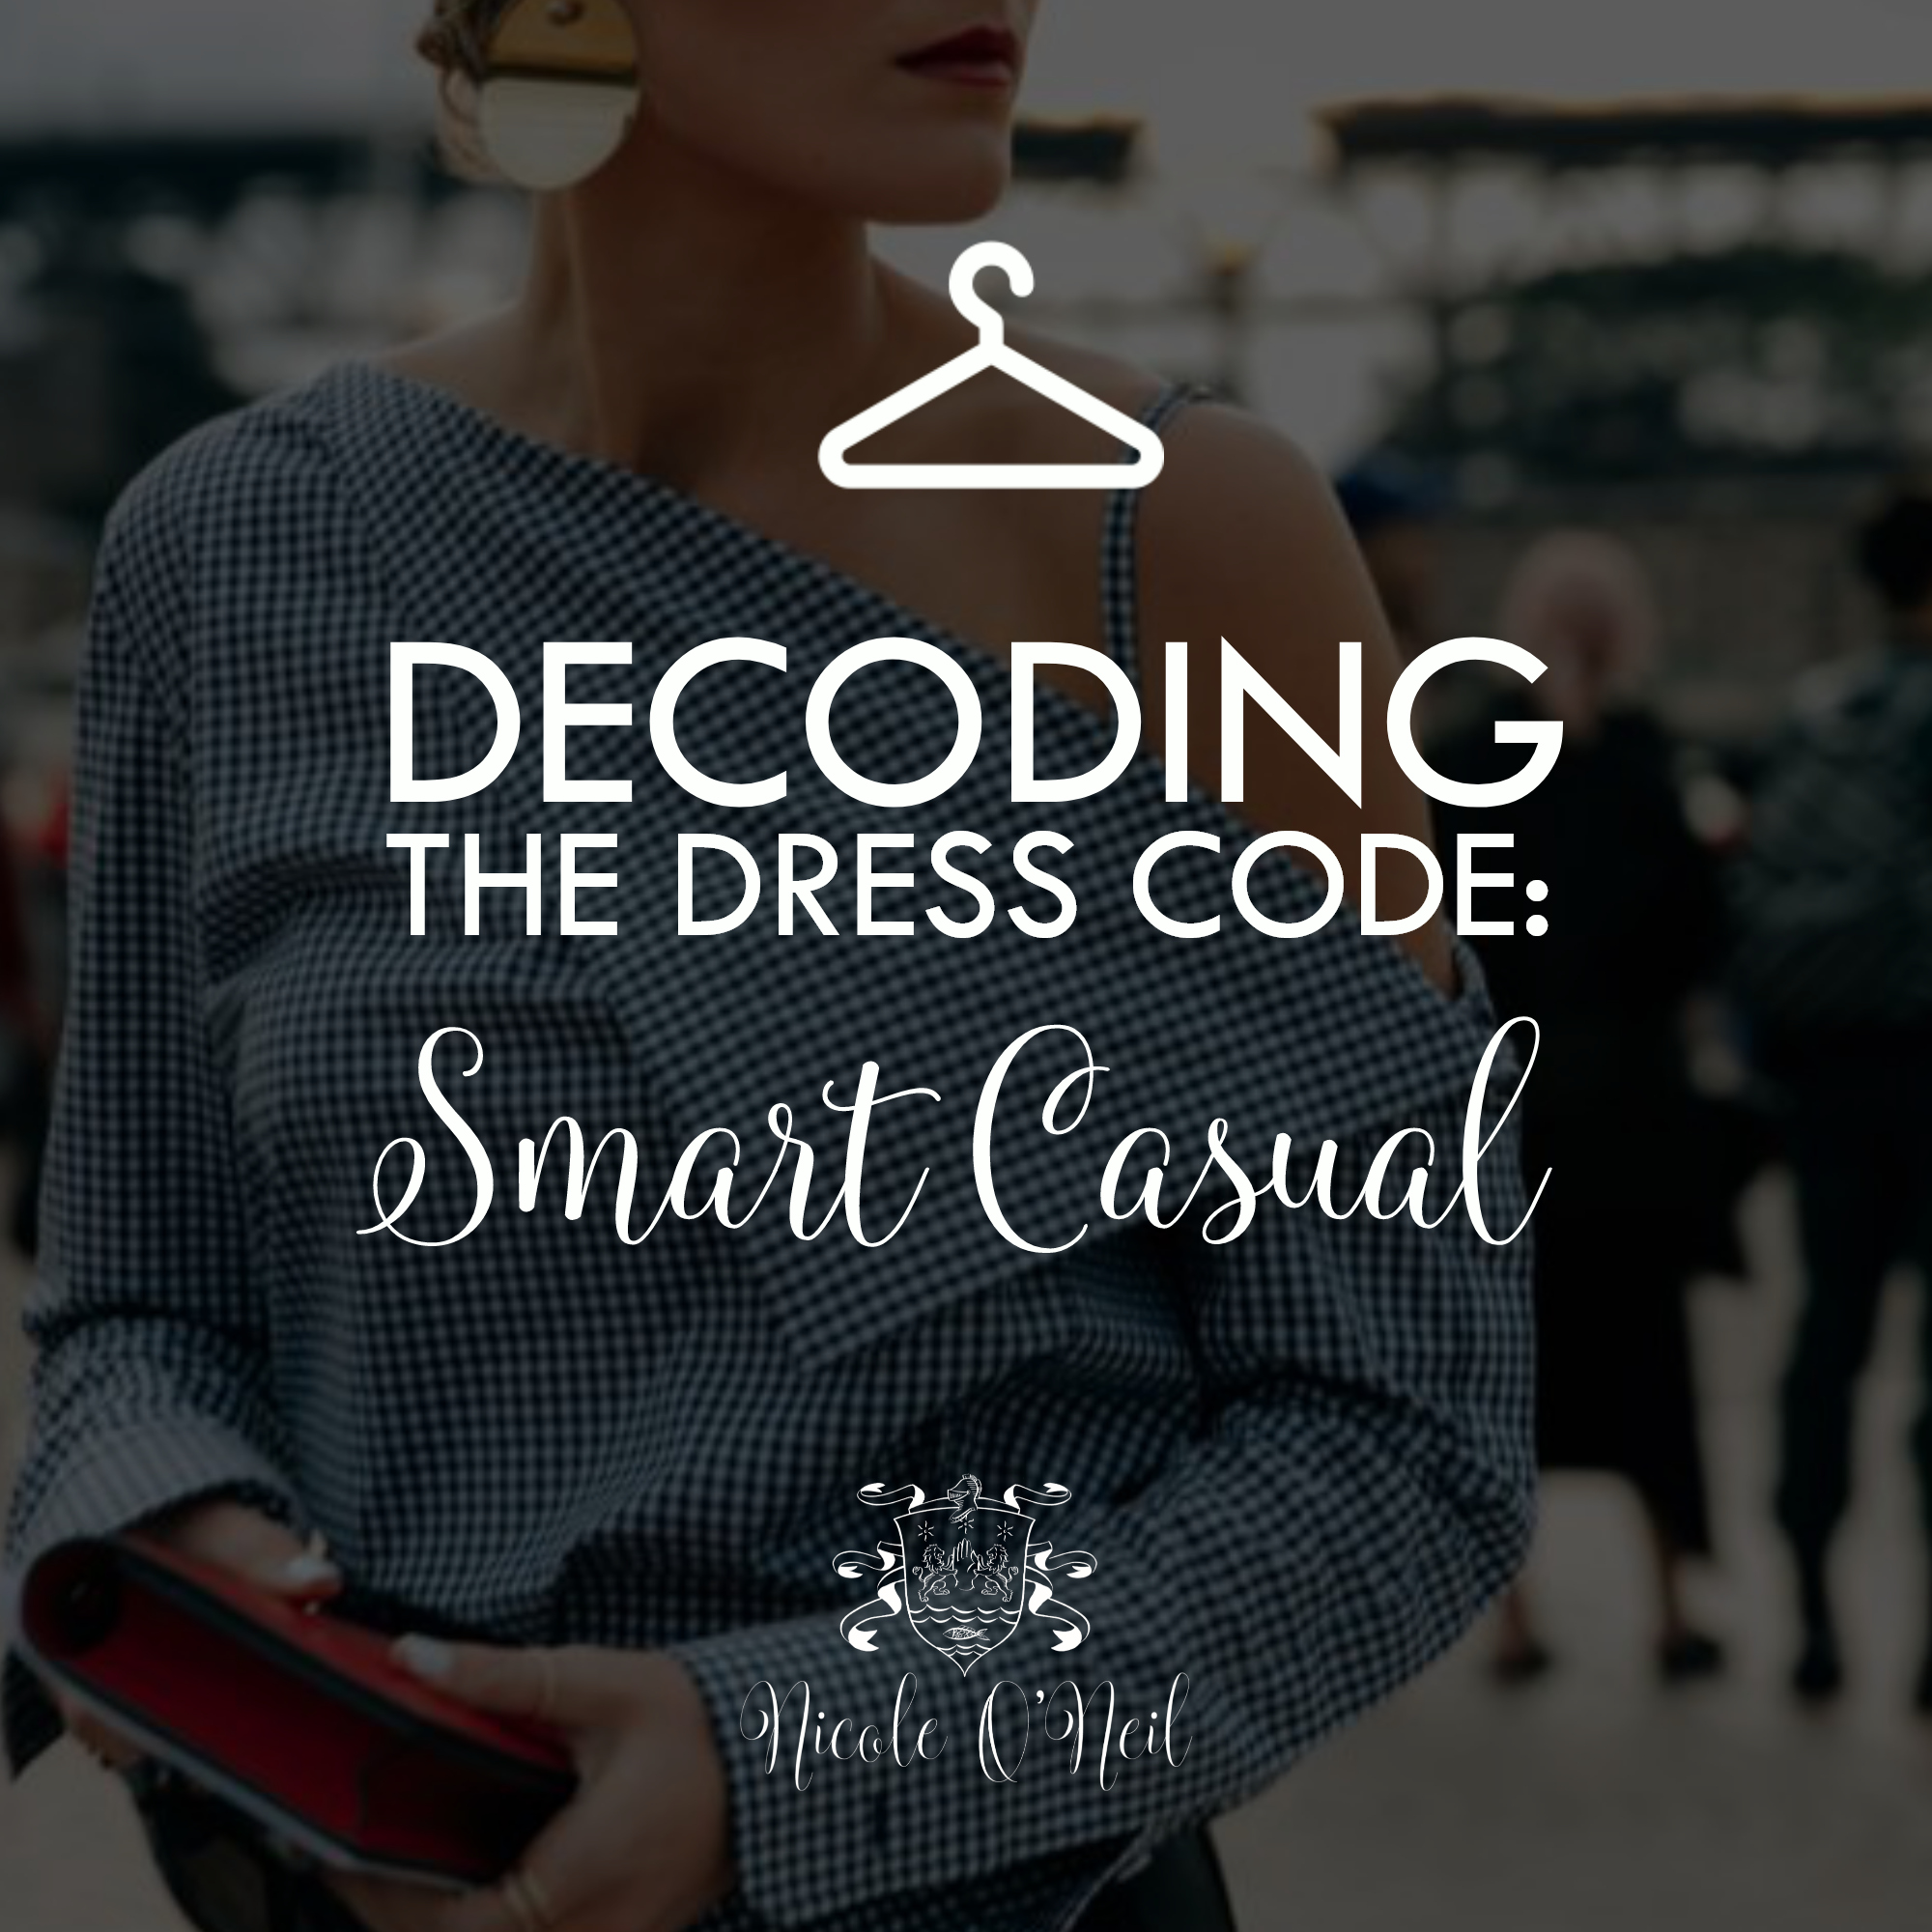 smart casual dress code wedding